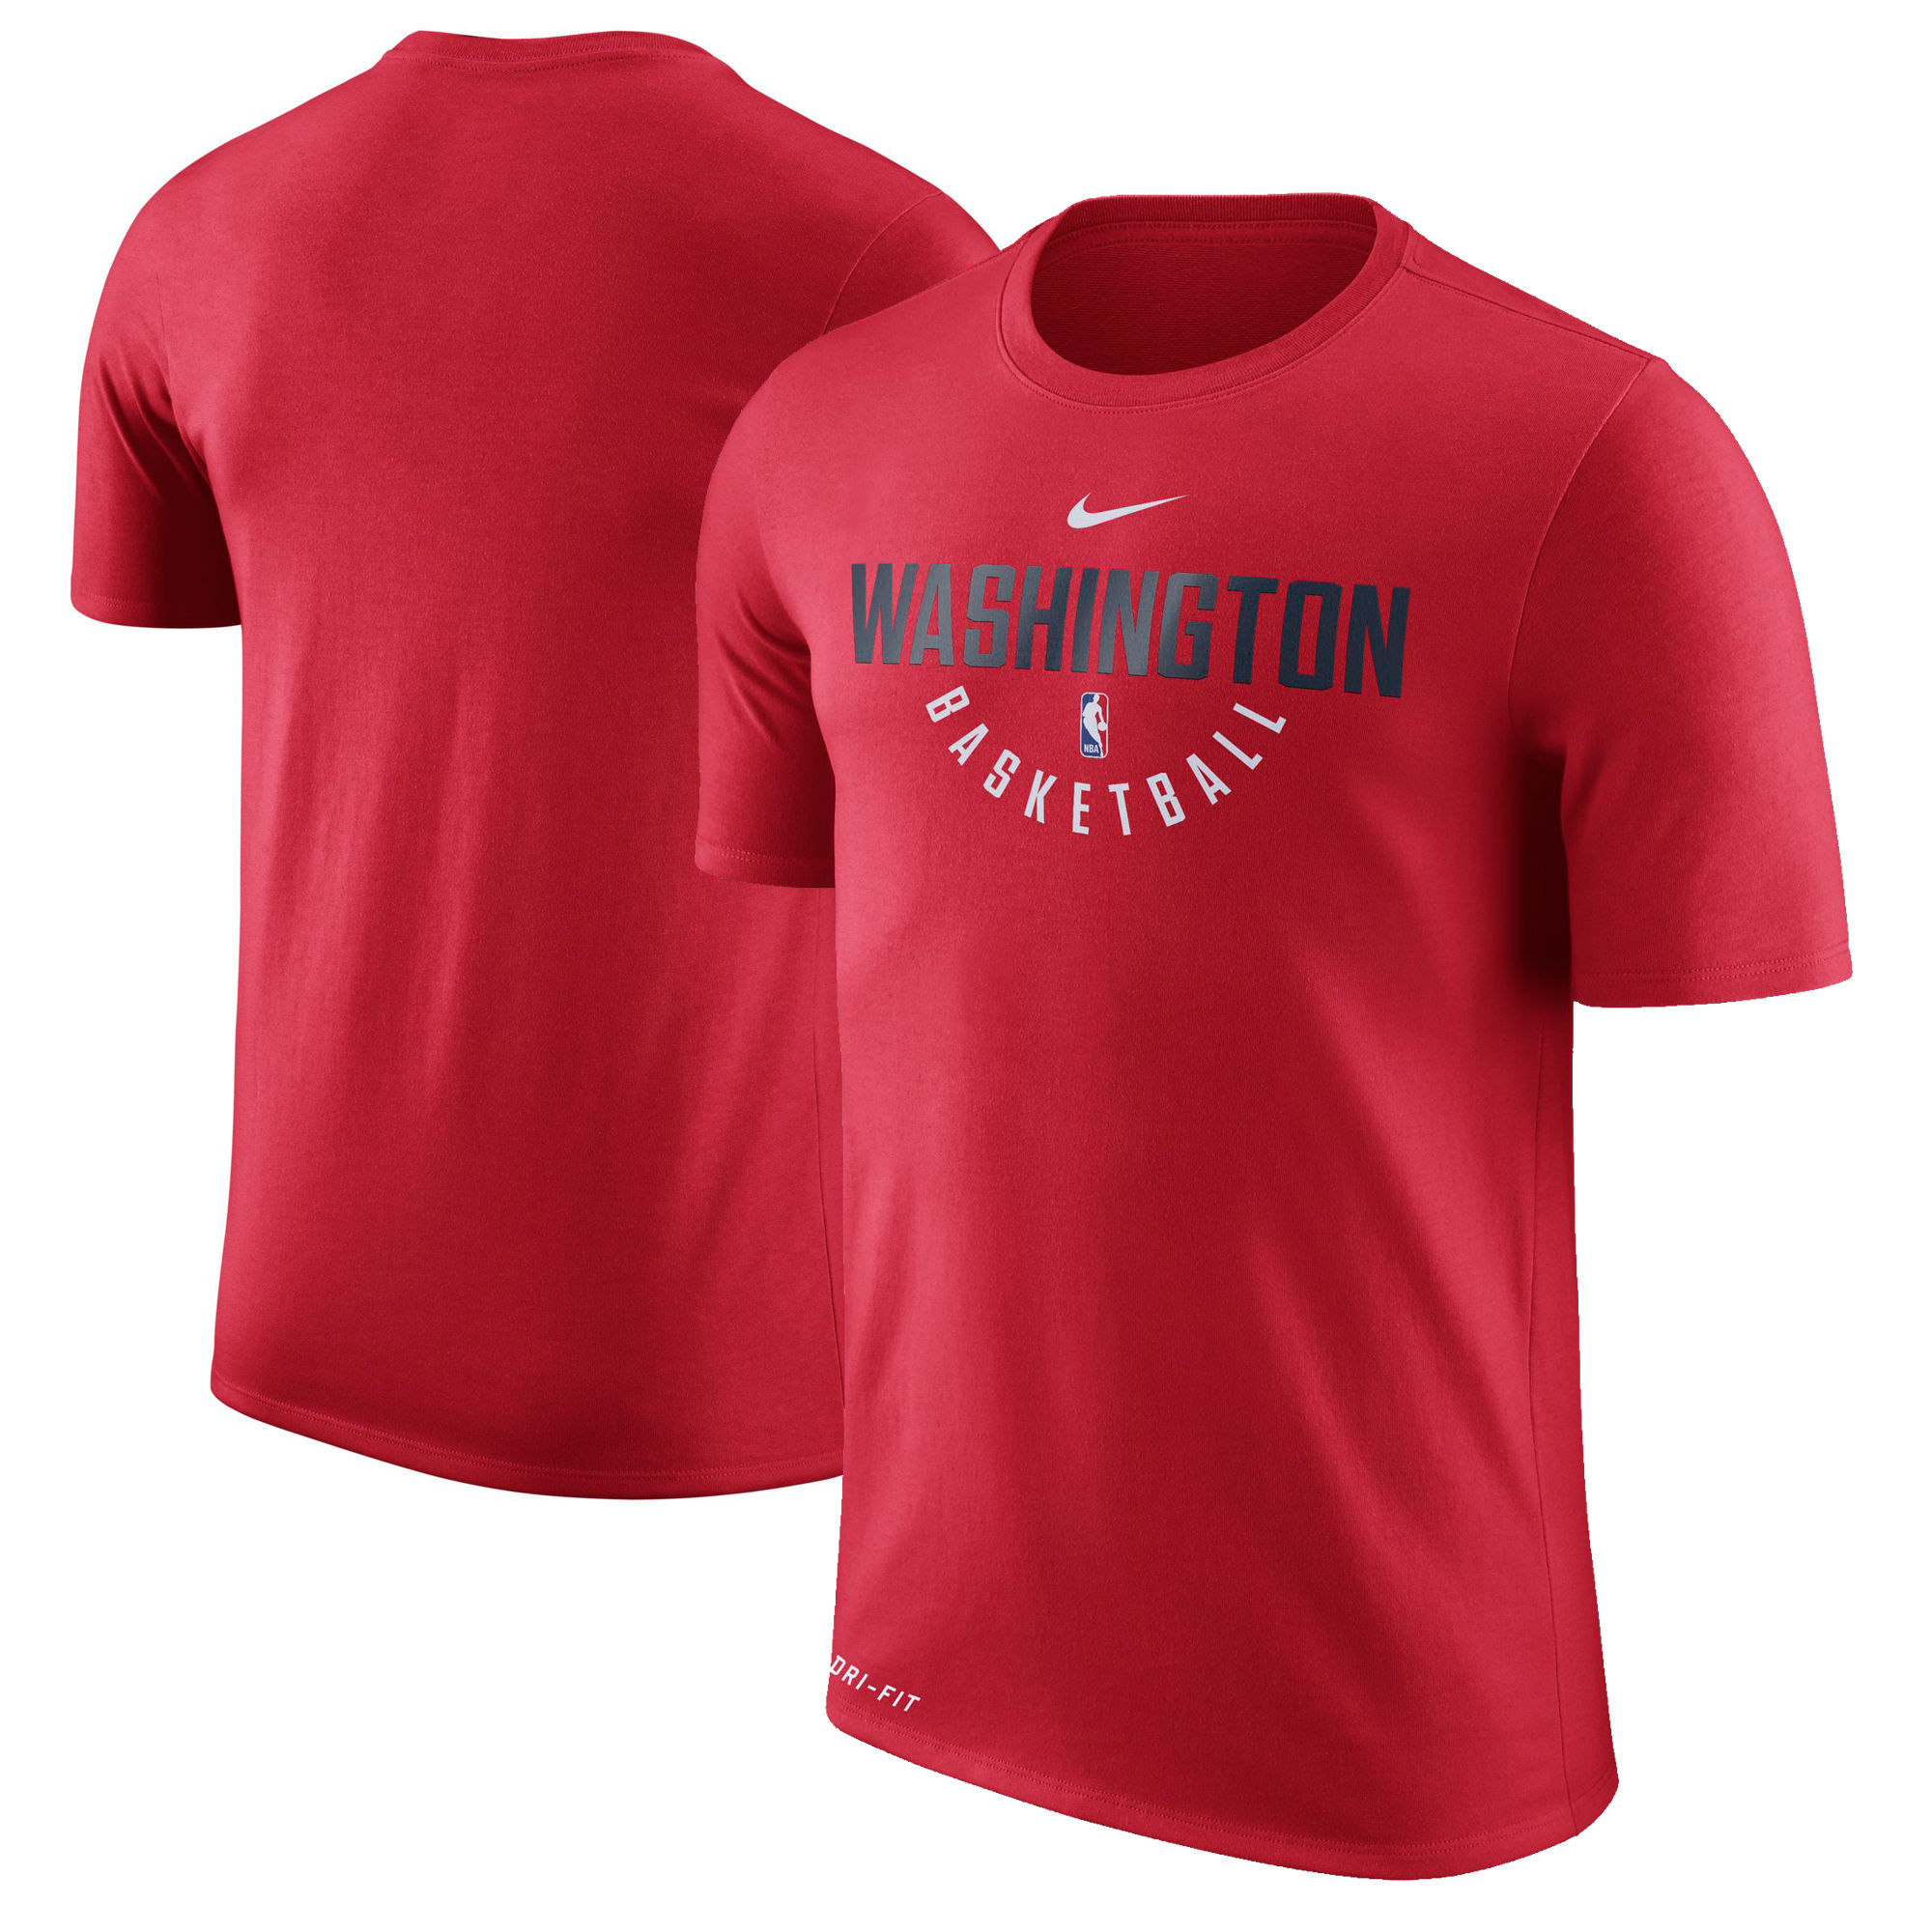 Washington Wizards Red Nike Practice Performance T-Shirt